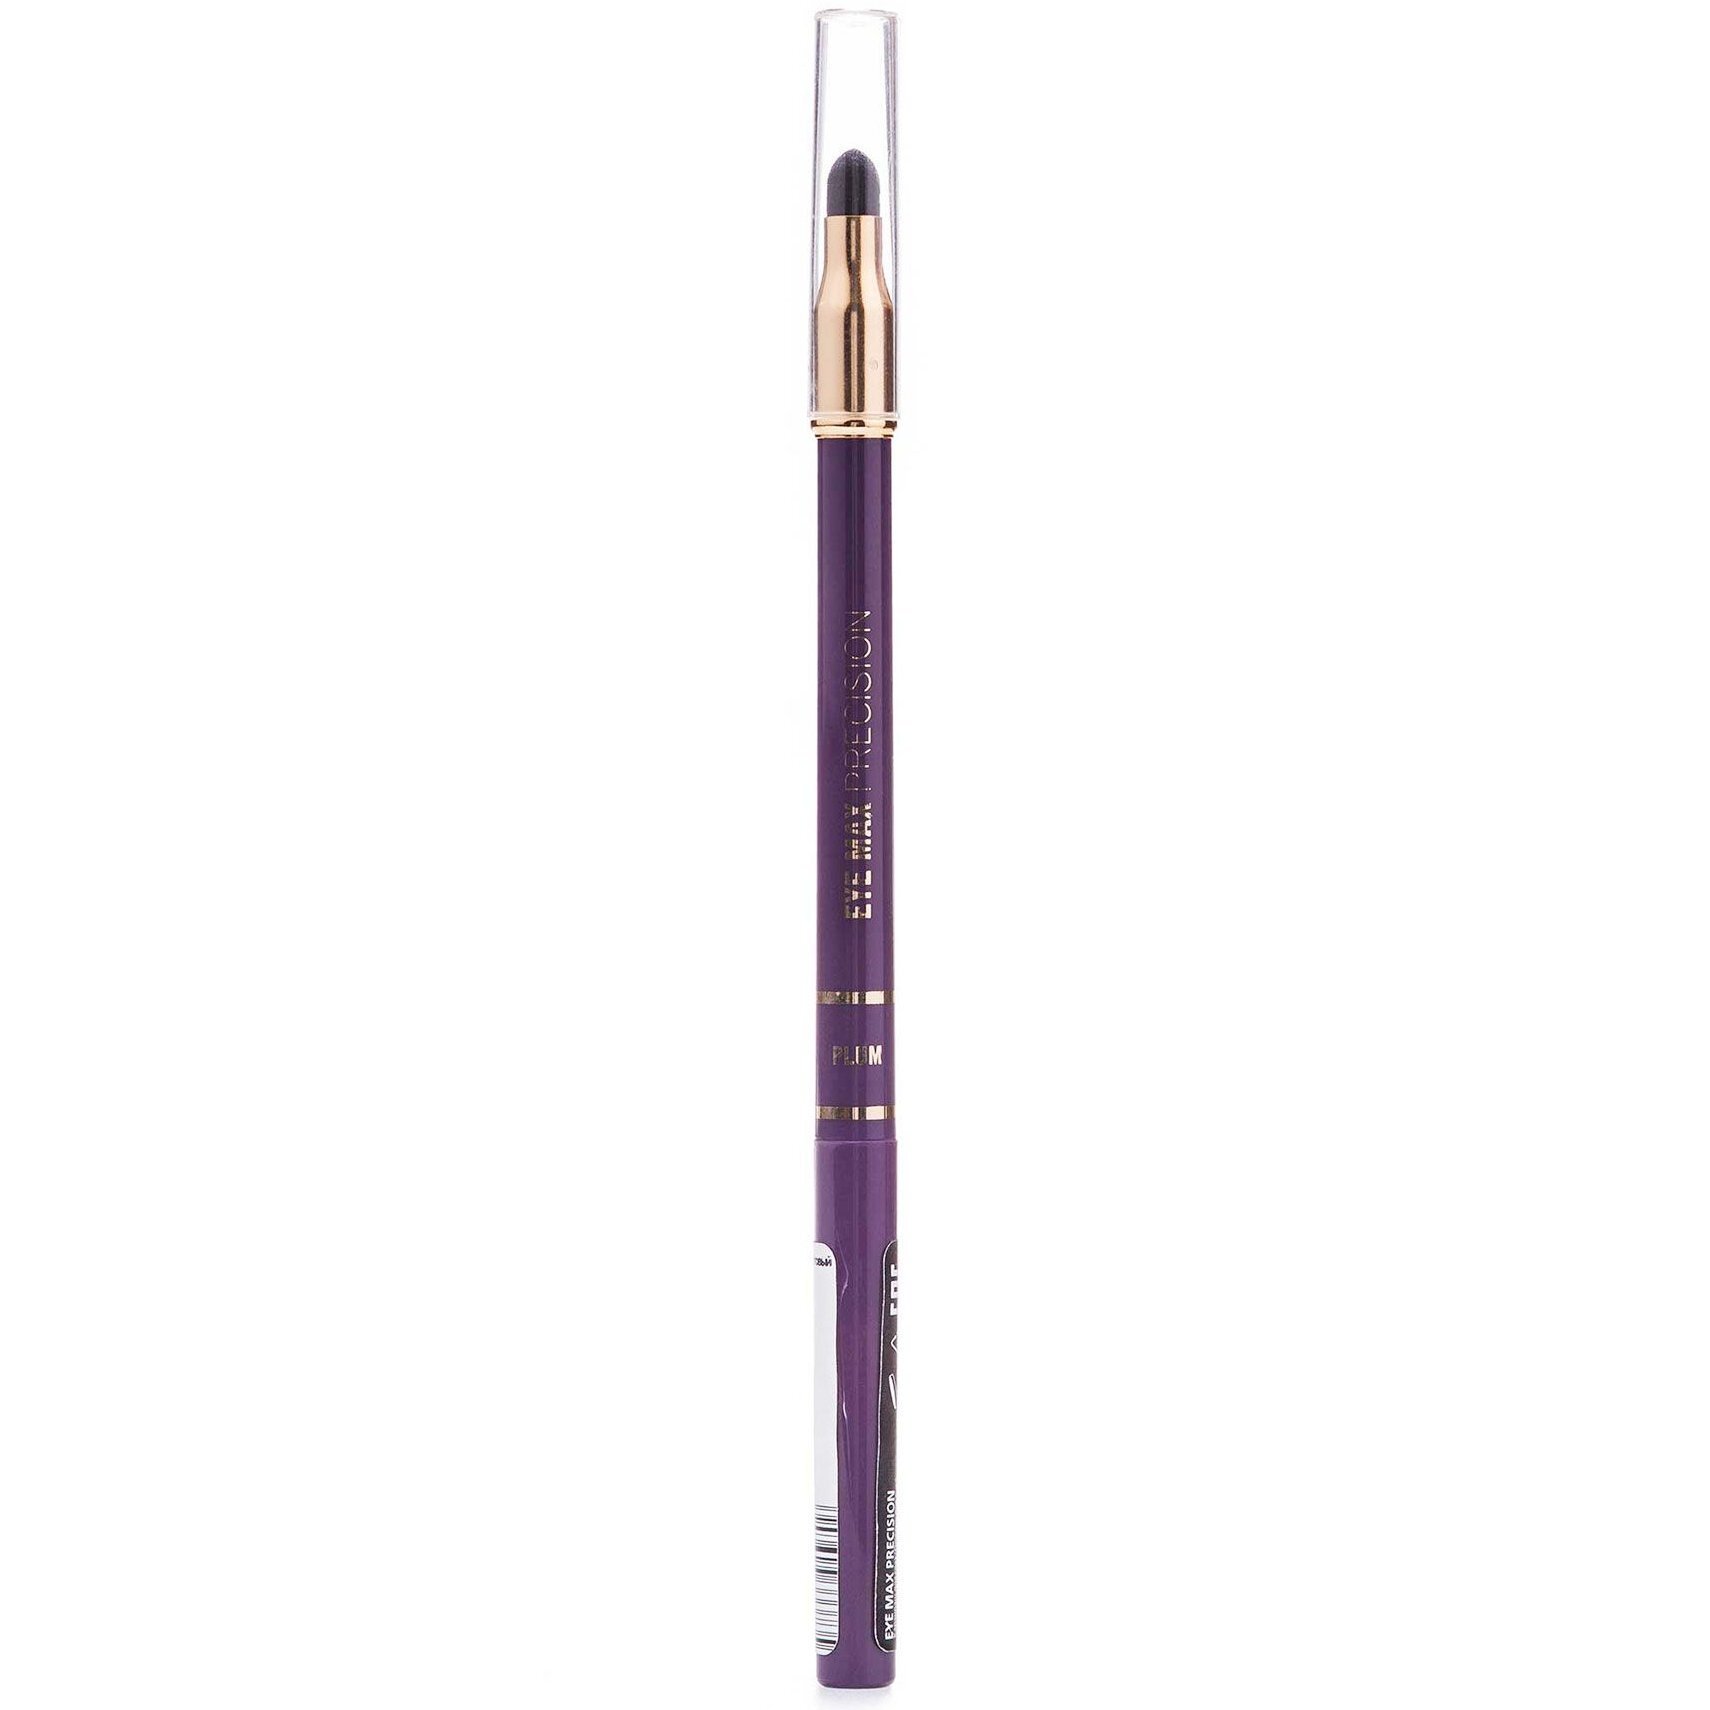 Eveline Cosmetics Eye max precision карандаш автомат фиолет. для глаз с растушкой. фото 1